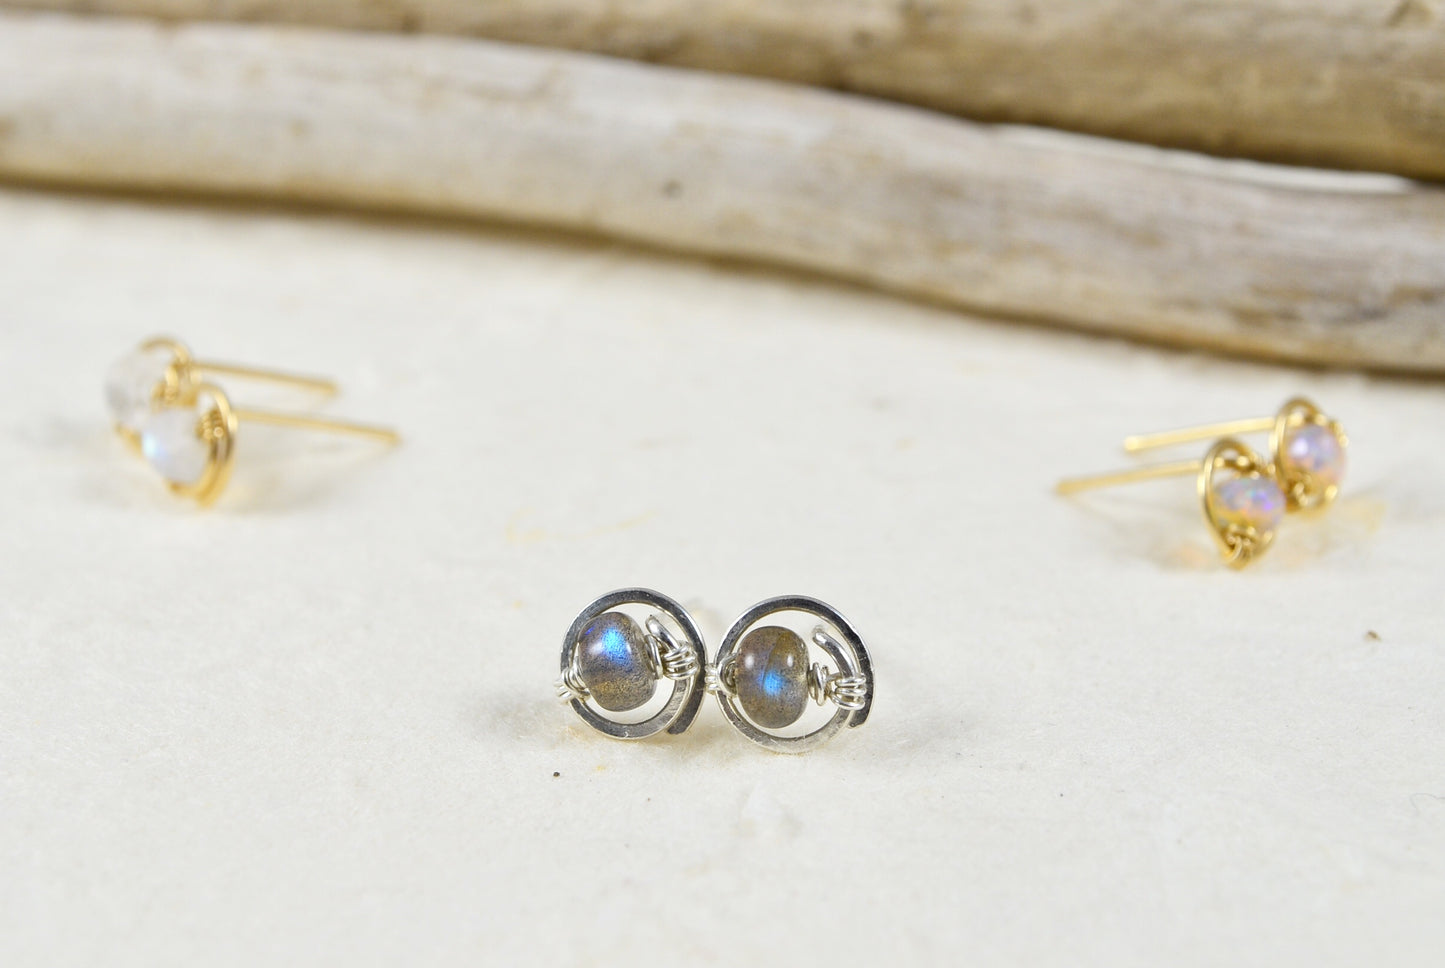 Labradorite Gemstone Stud earrings in Sterling Silver or 14k Gold Filled